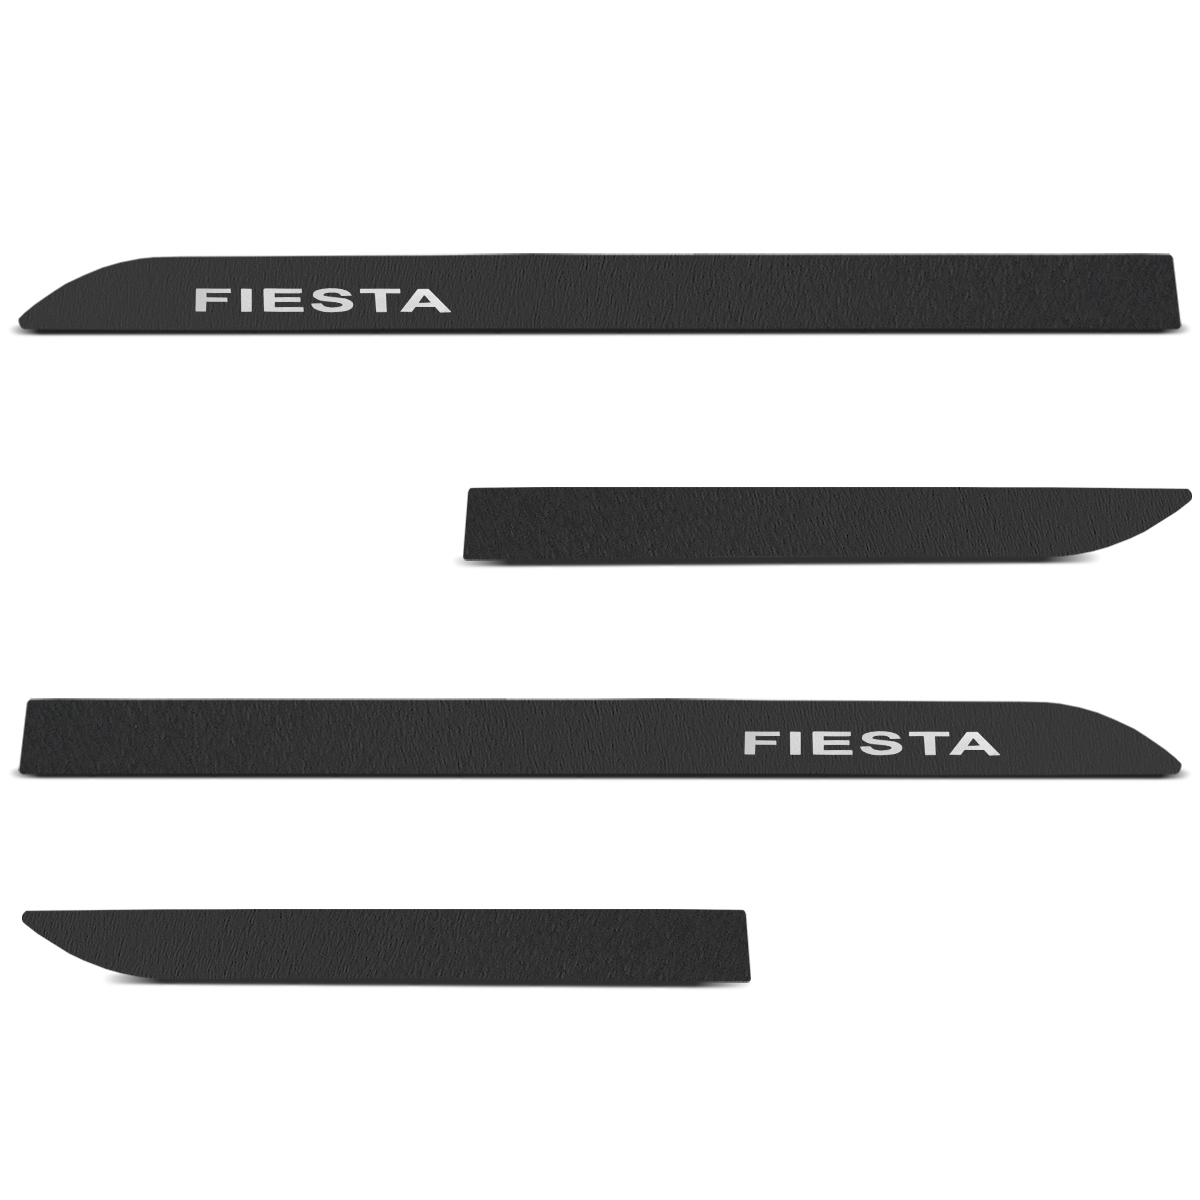 Jogo de Friso Lateral New Fiesta 2012 a 2019 Preto Texturizado